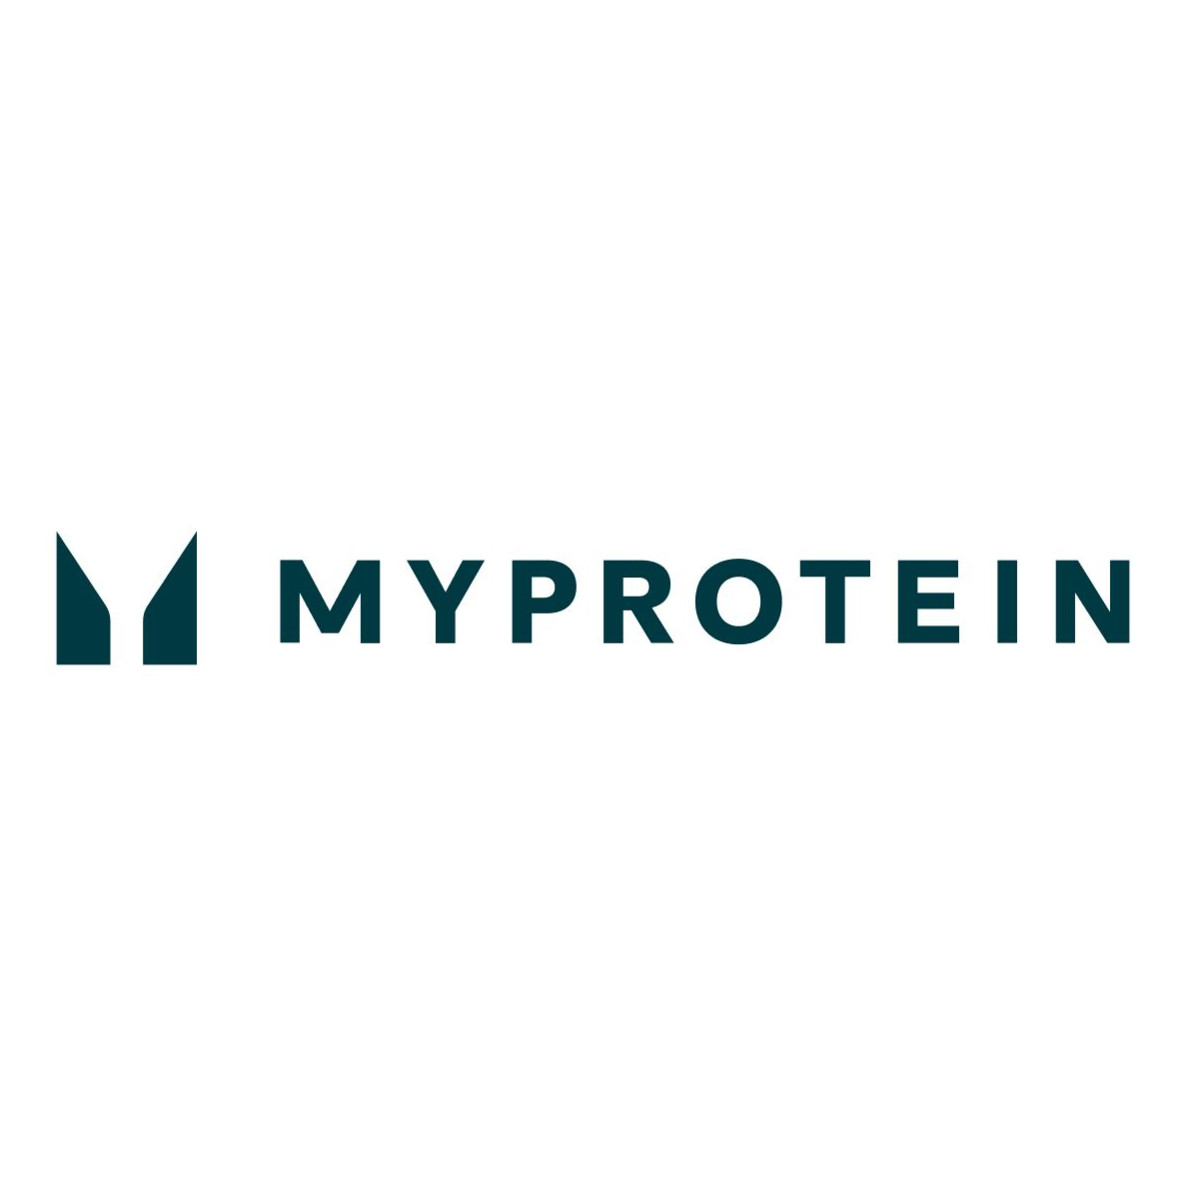 My protein logo